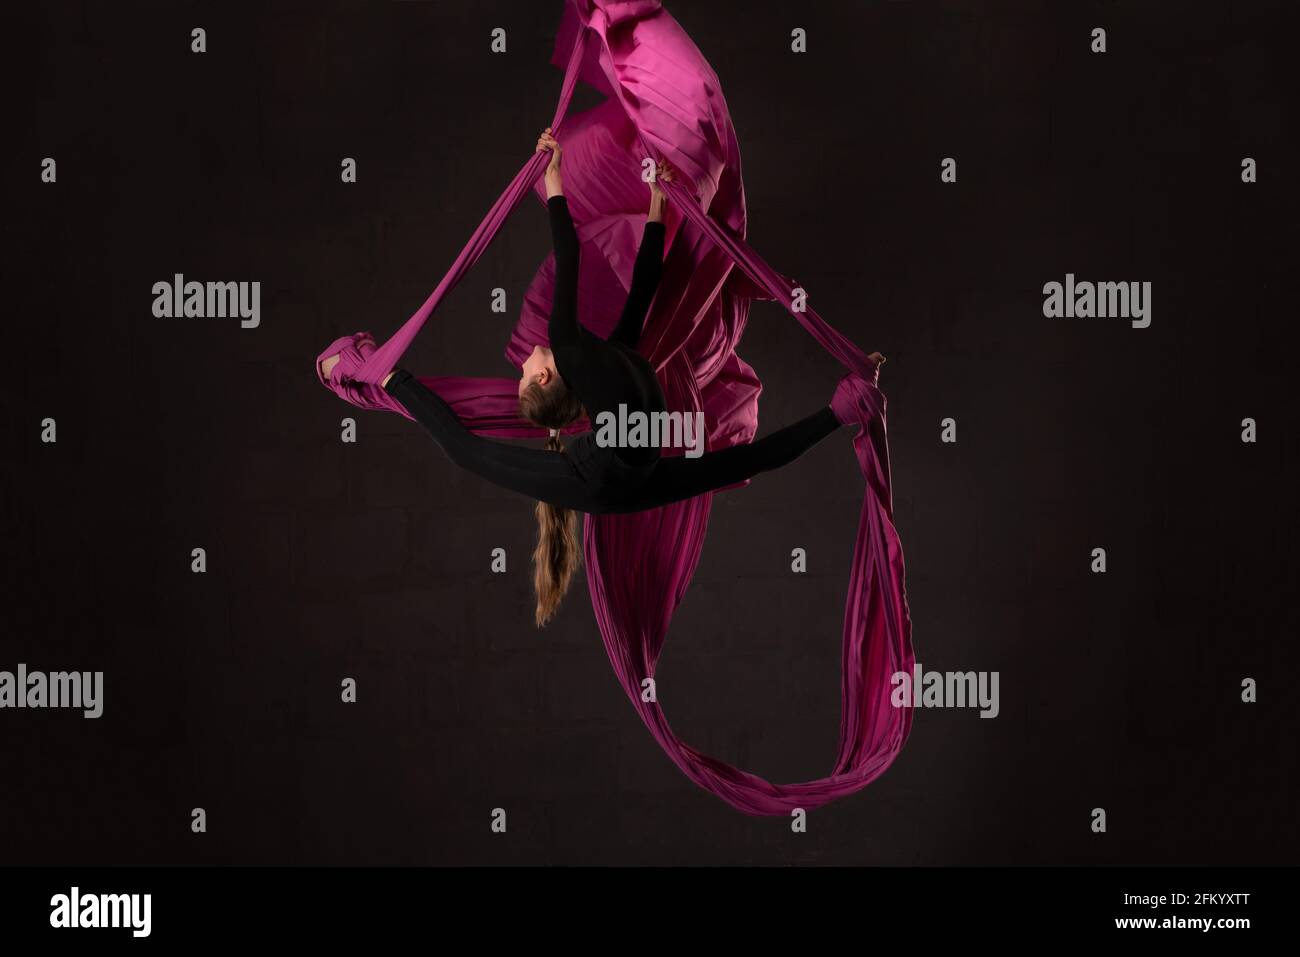 Flexible teen doing aerial silks trick on fabric Stock Photo